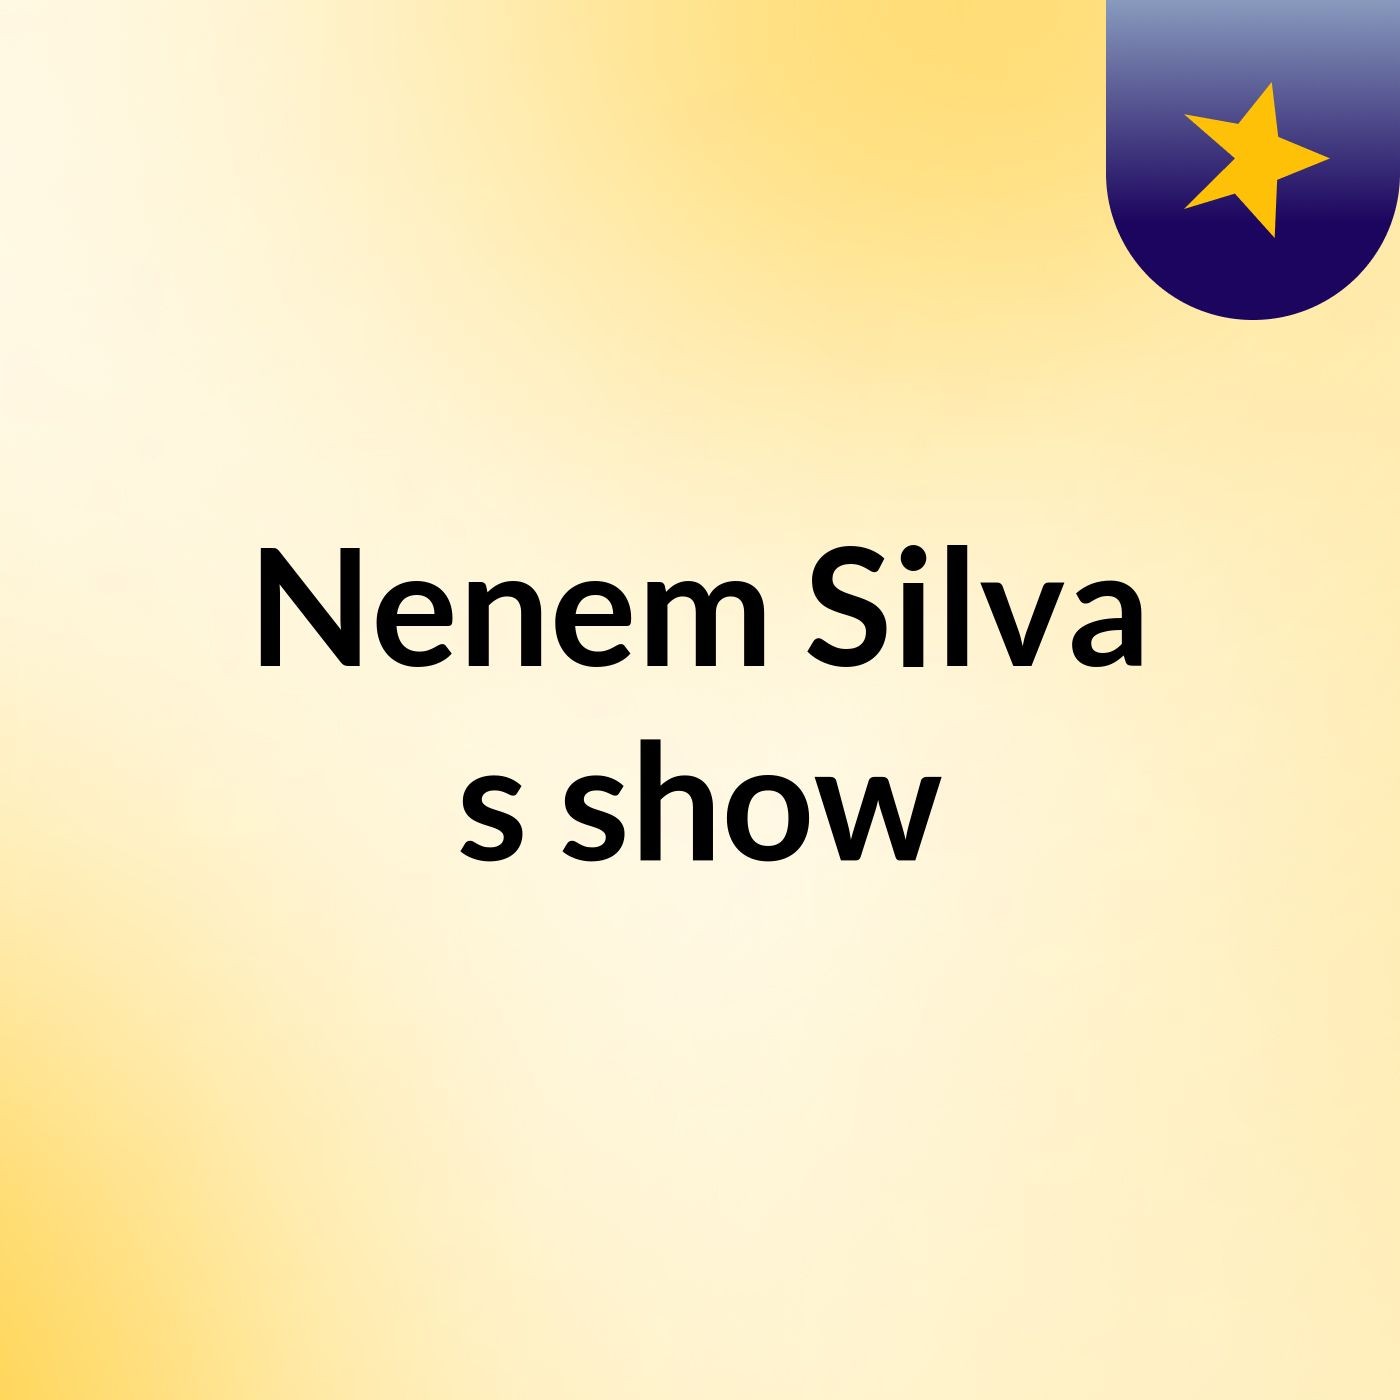 Nenem Silva's show